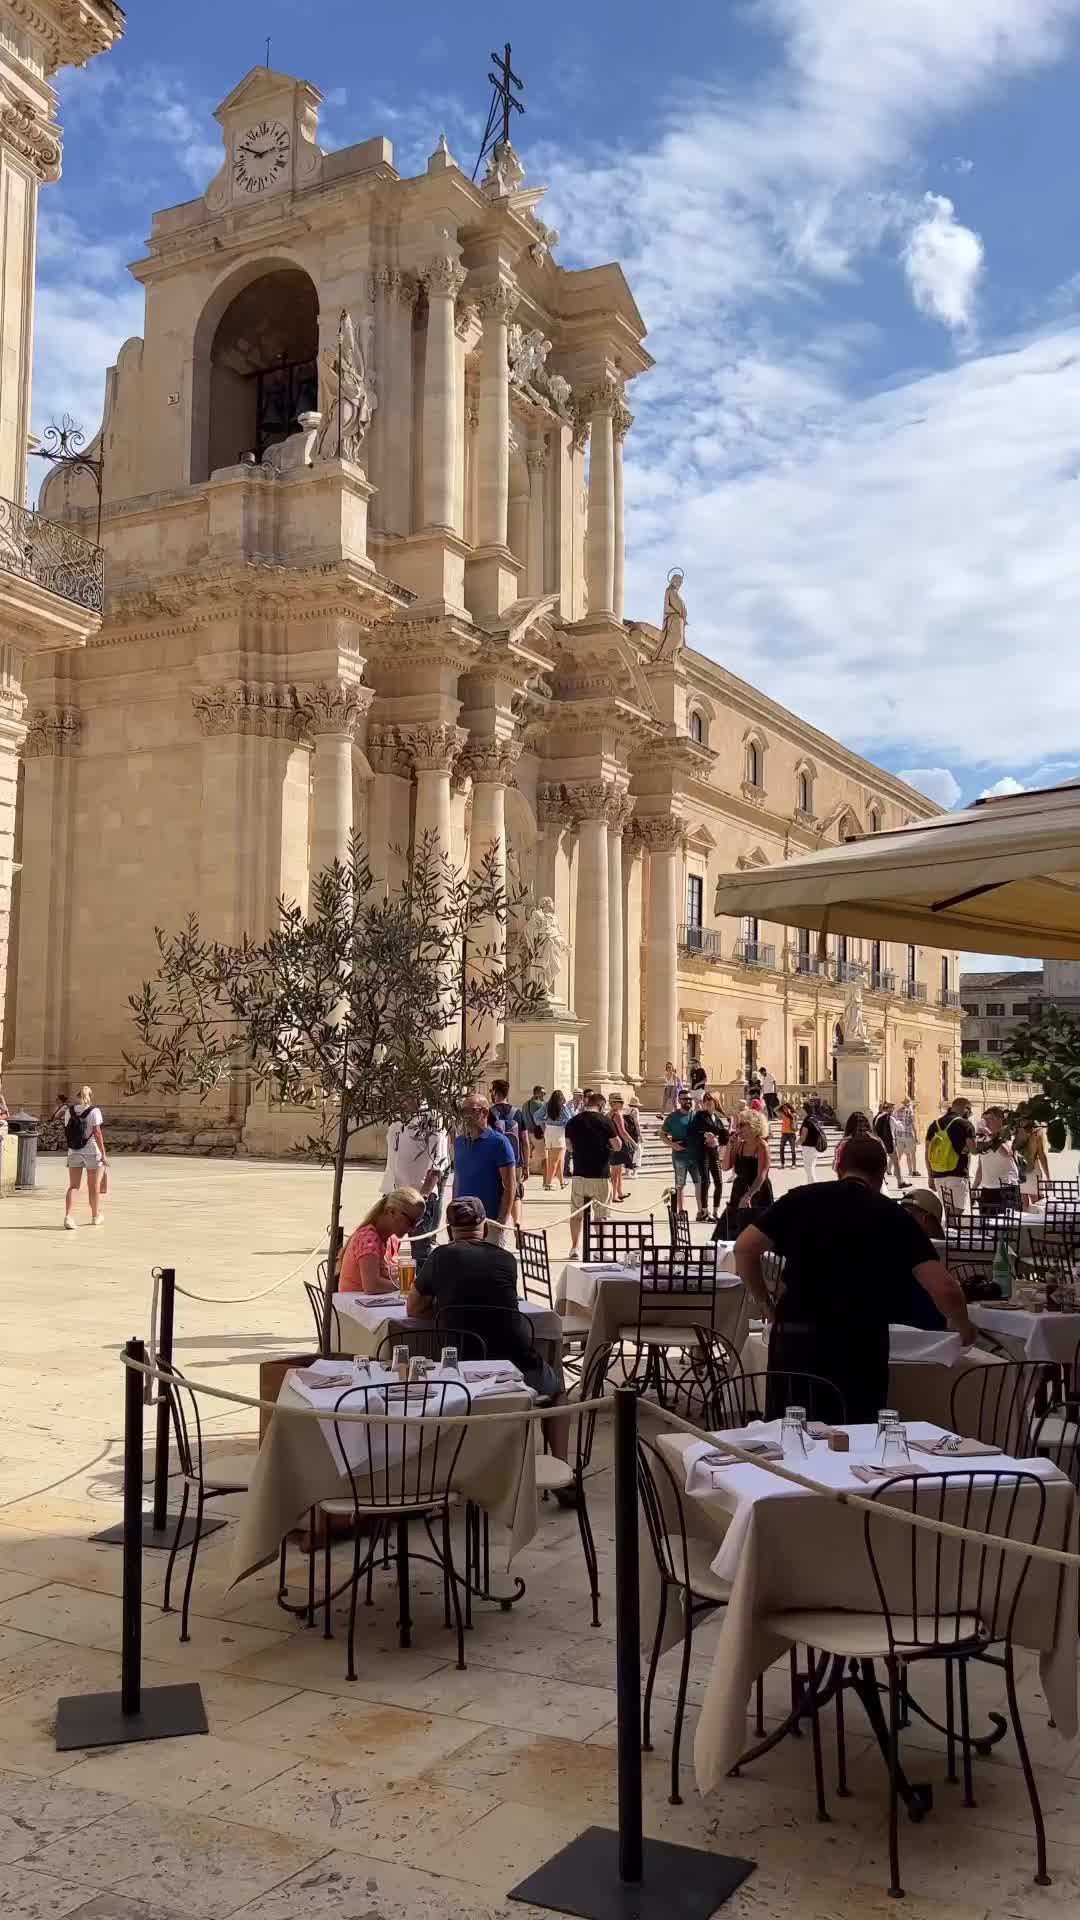 Explore Piazza Duomo in Ortigia, Sicily - Italy Travel